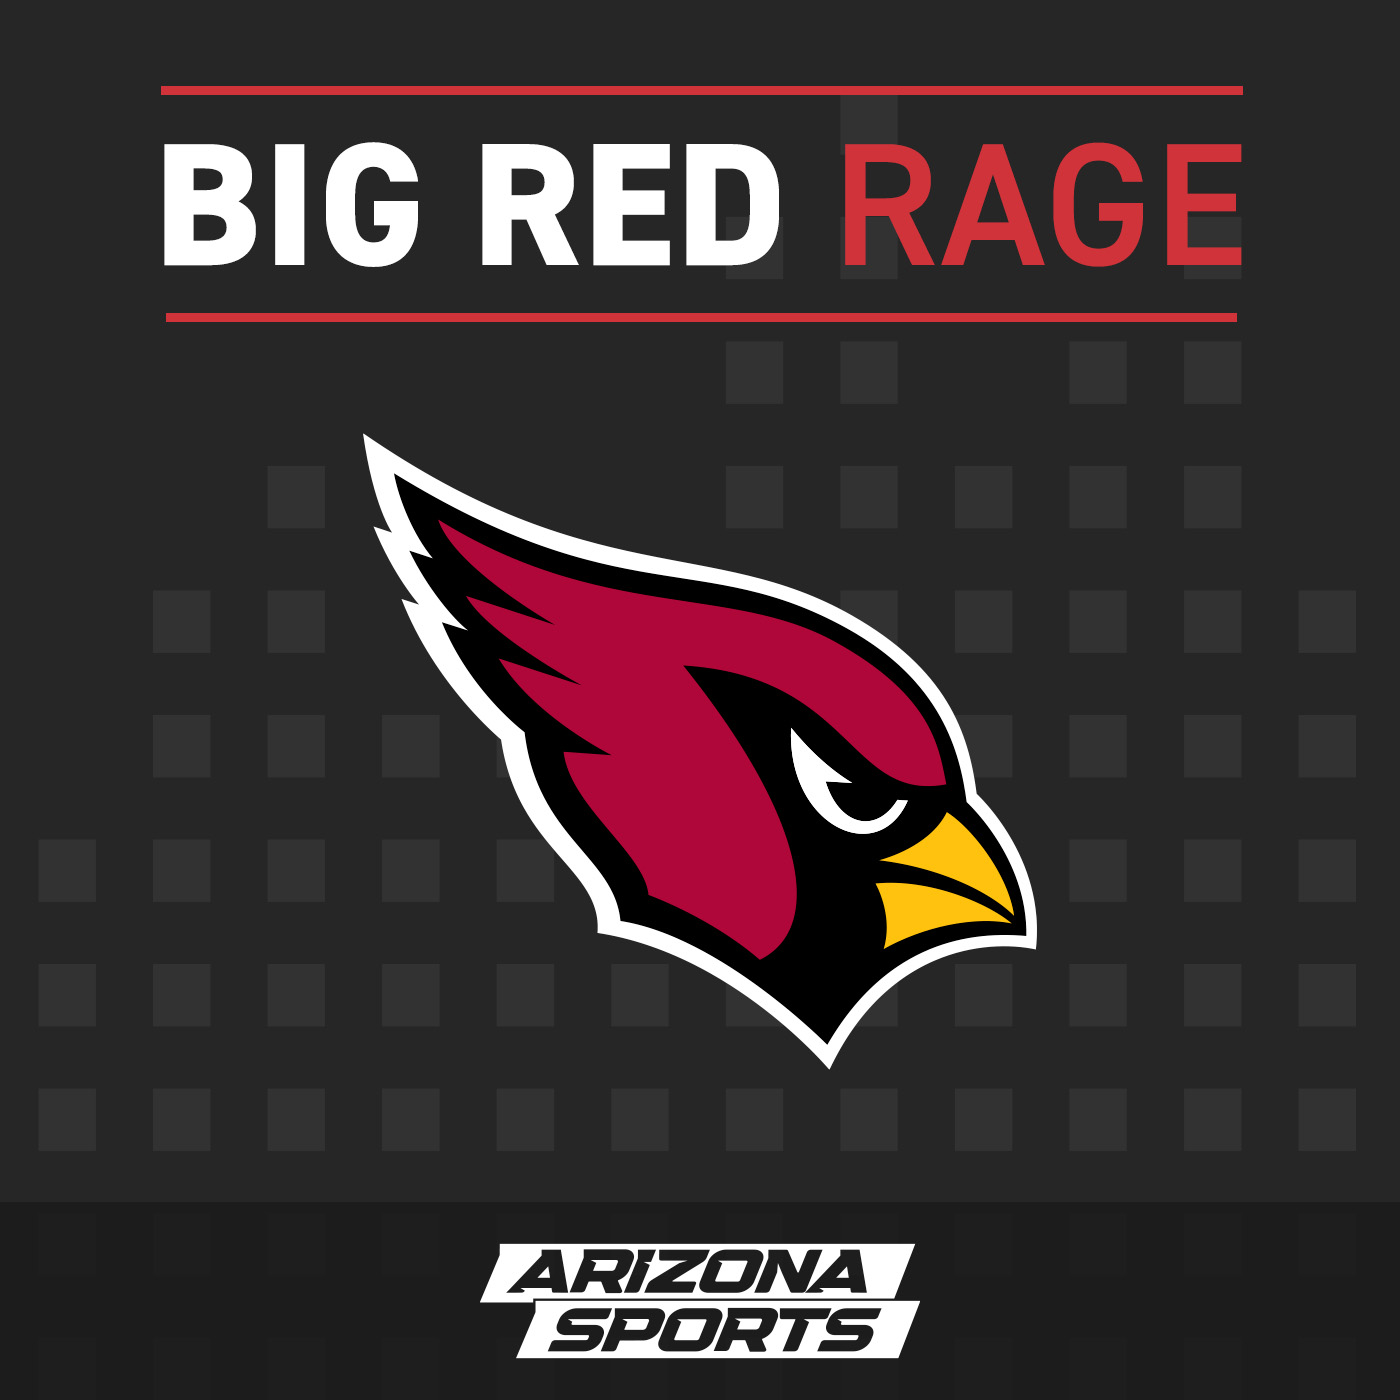 2-20-20 Big Red Rage